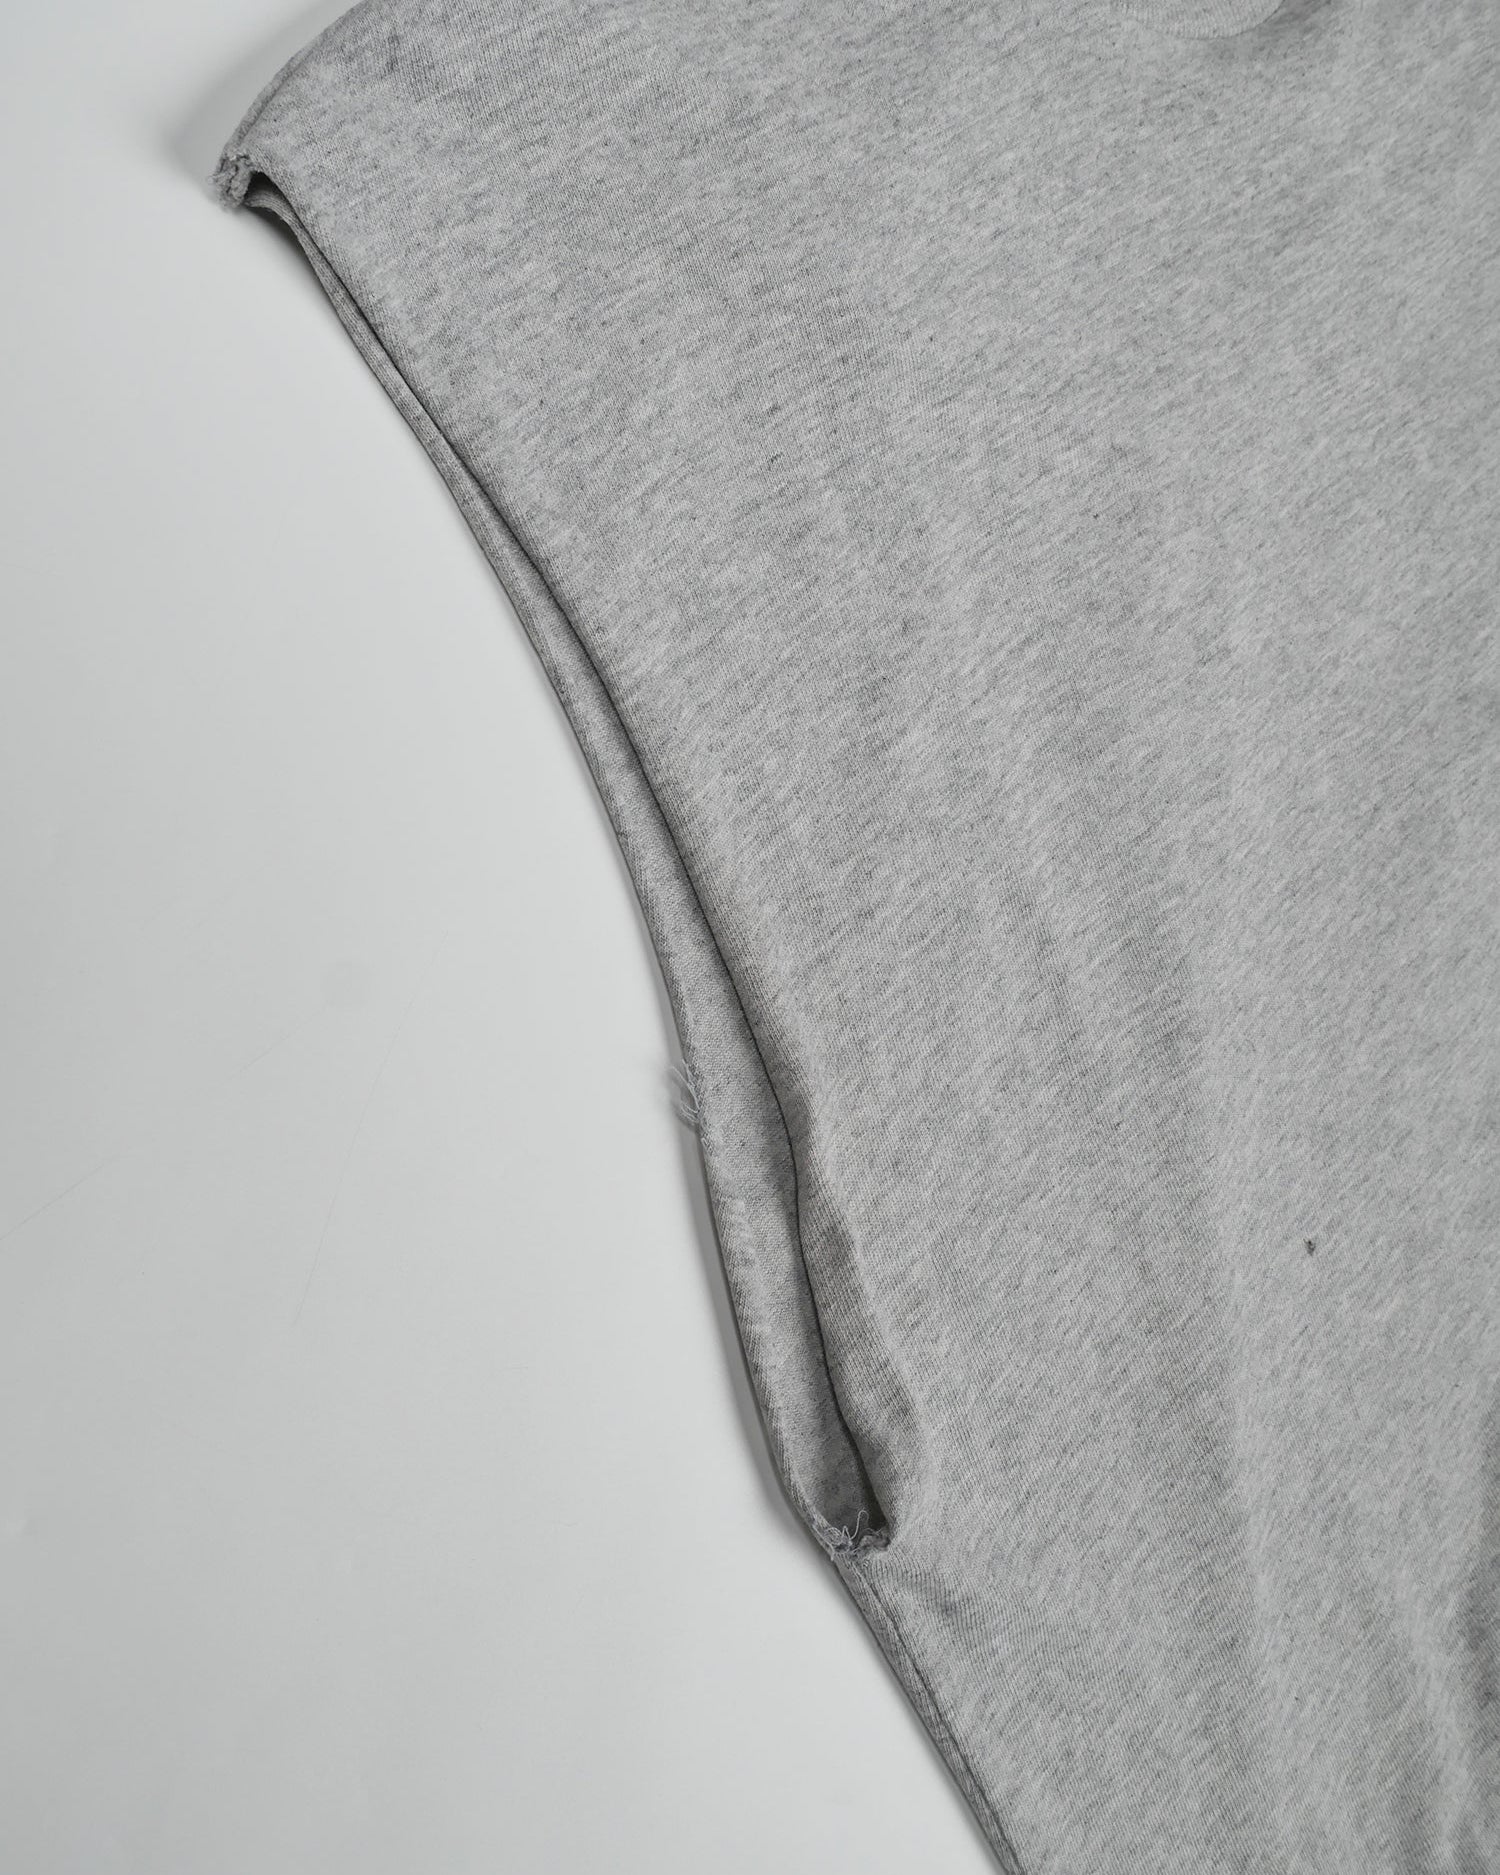 Nike grau Trägershirt - Peeces